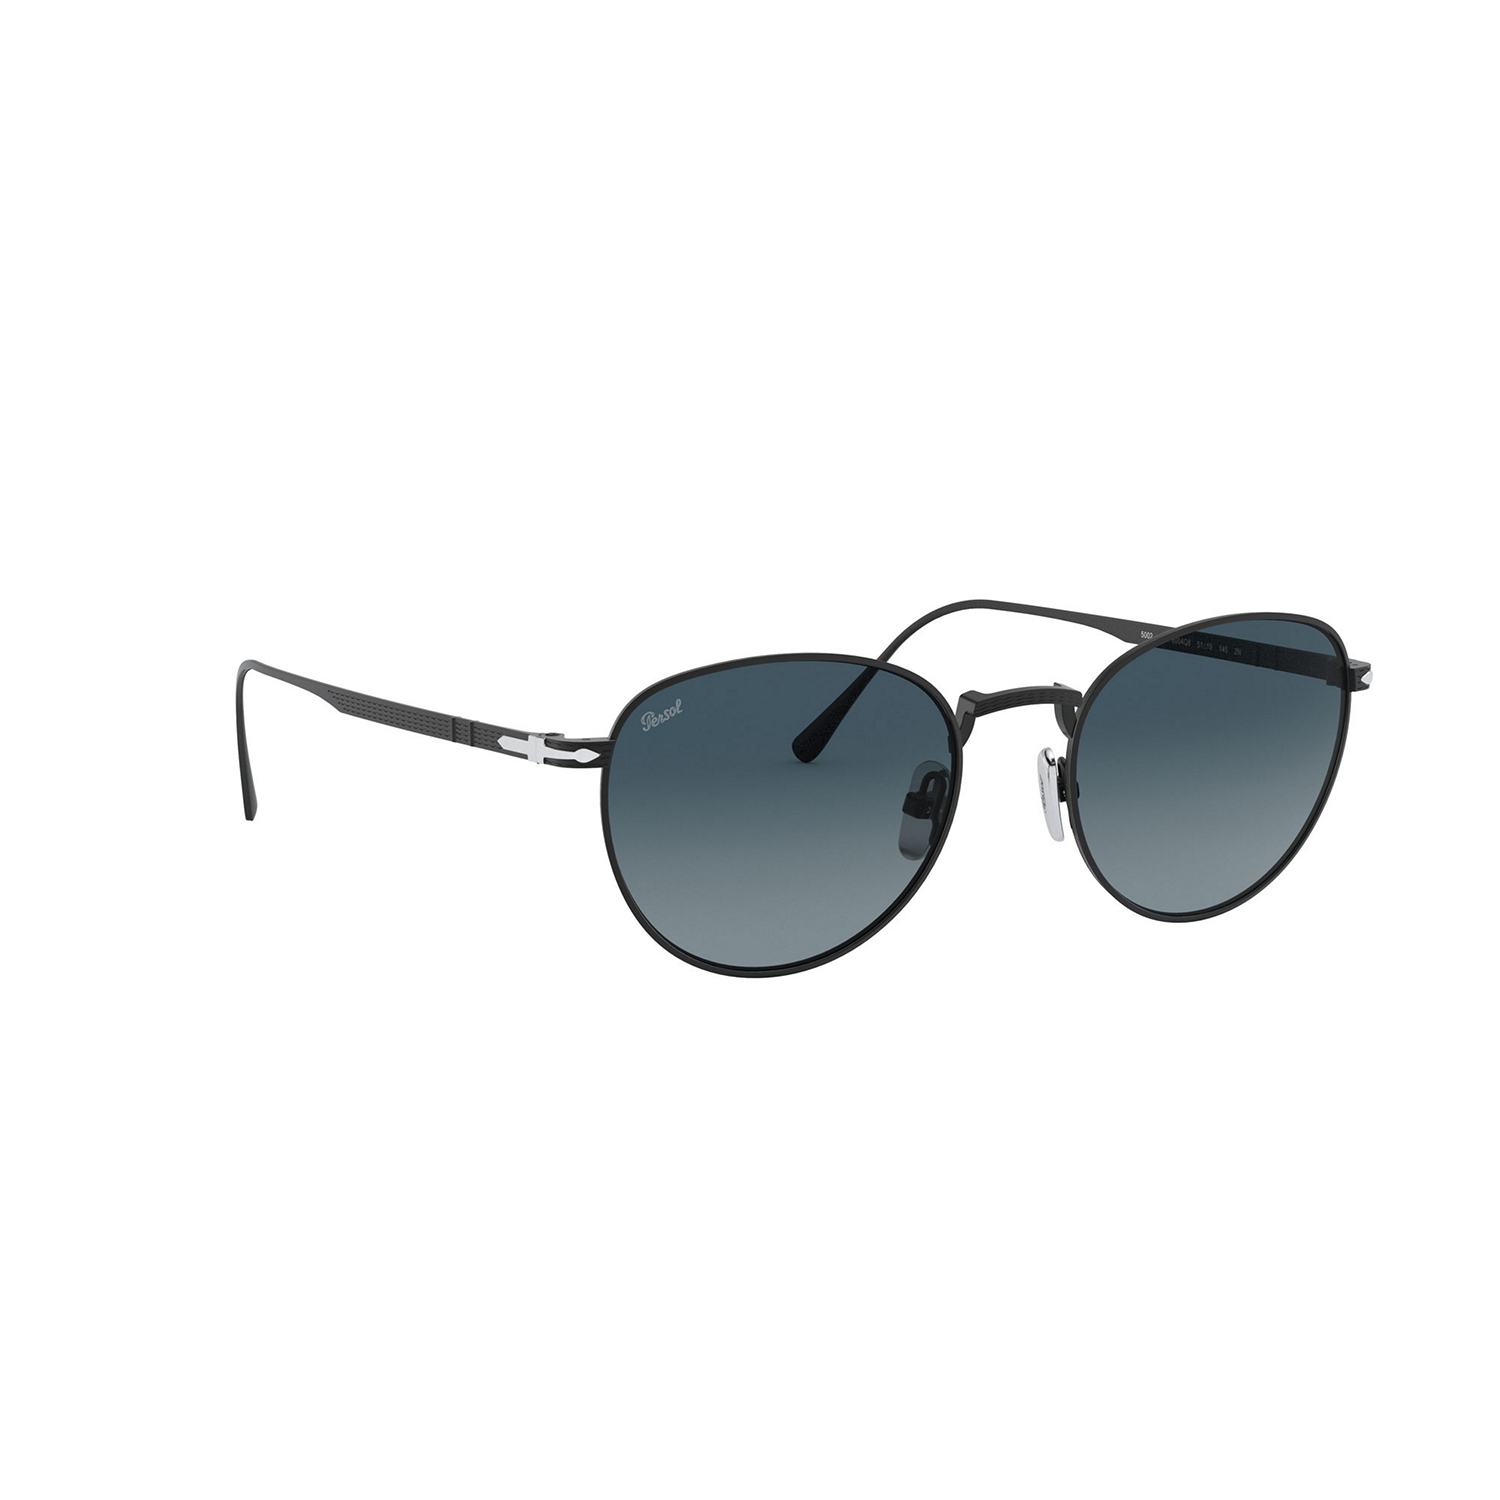 Phantos Sunglasses 0PO5002ST